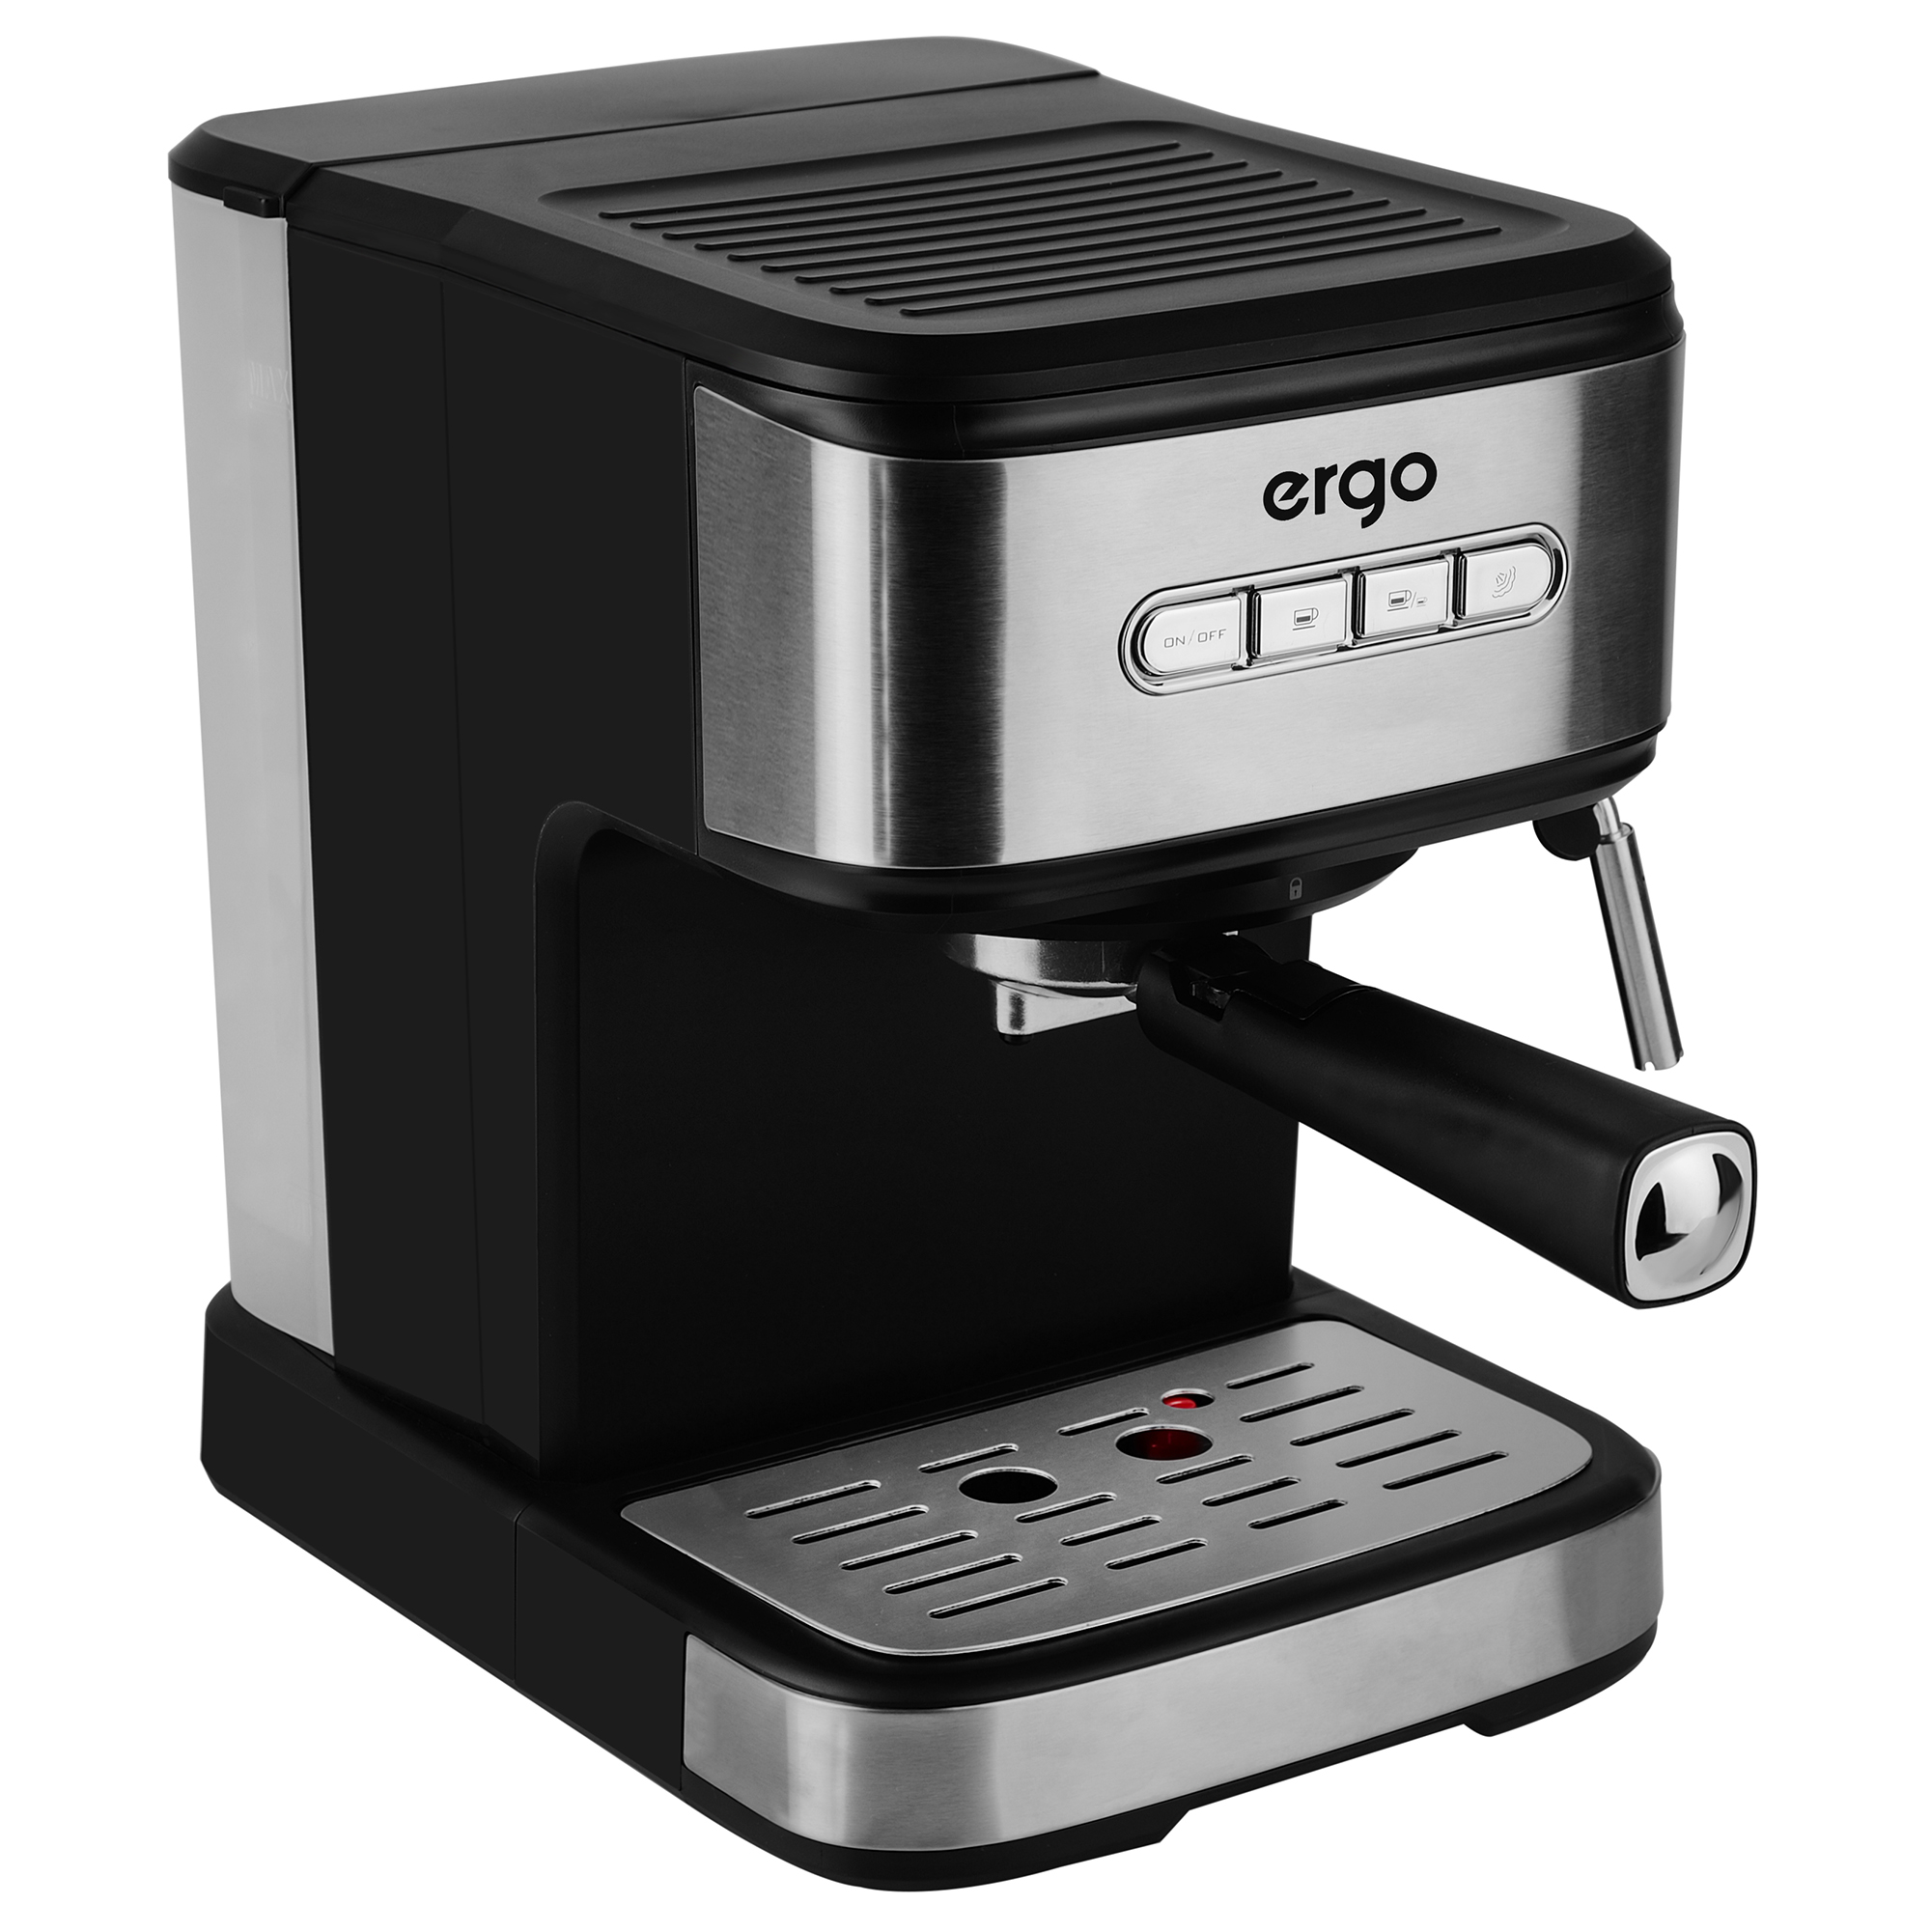 Кофеварка Ergo CE 7700 цена 2598.96 грн - фотография 2